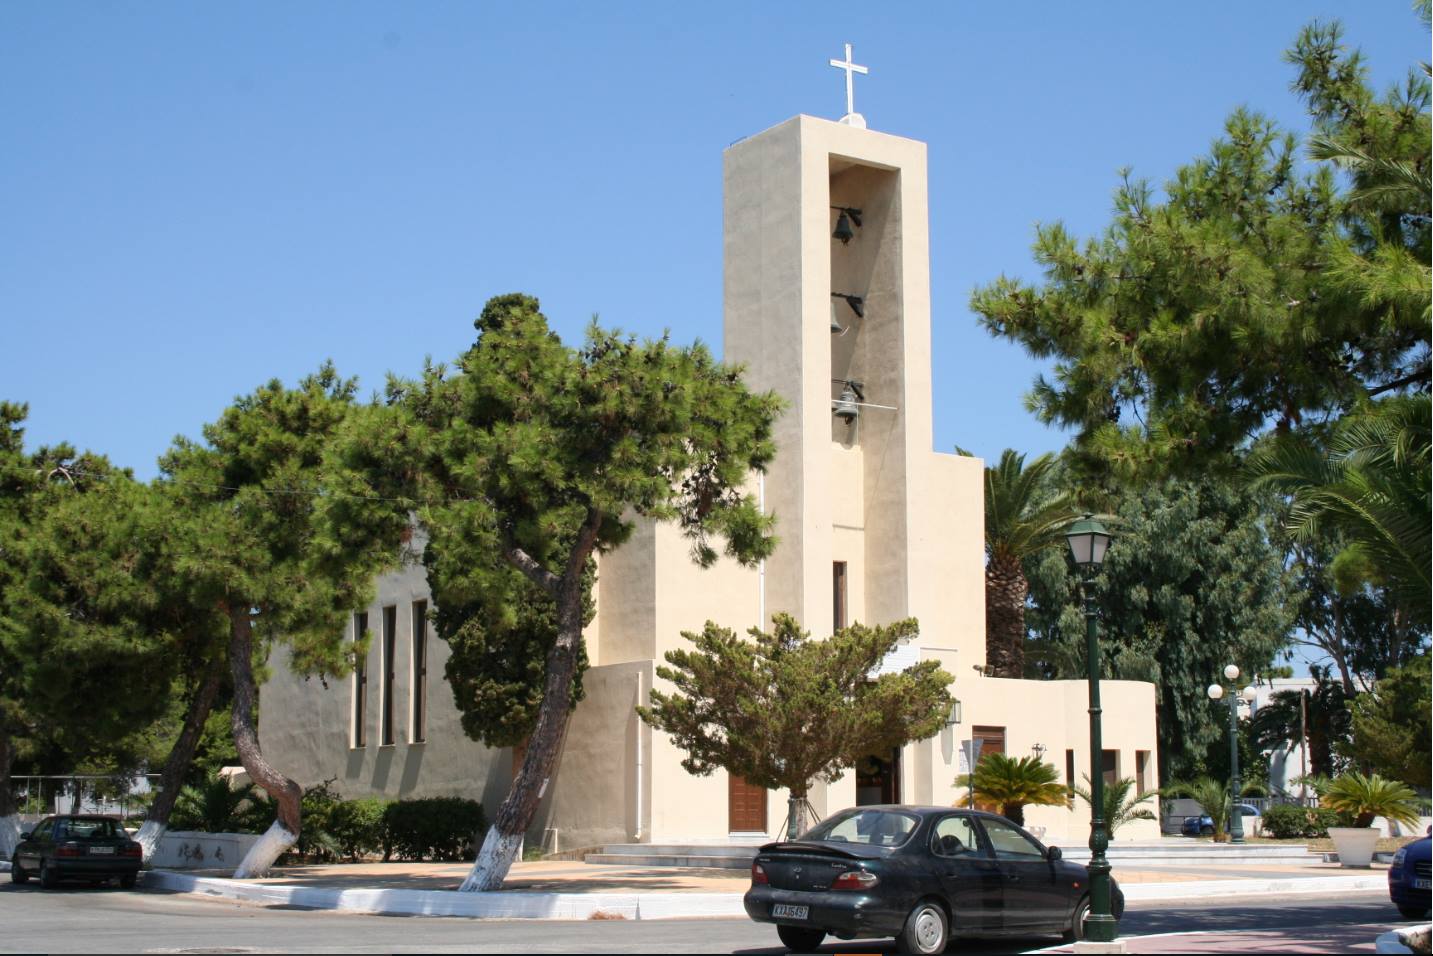 Chiesa di San Francesco oggi San Nicola - Portolago , Isola di Leros oggi Lakki , Grecia - Arch. Armando Bernabiti 